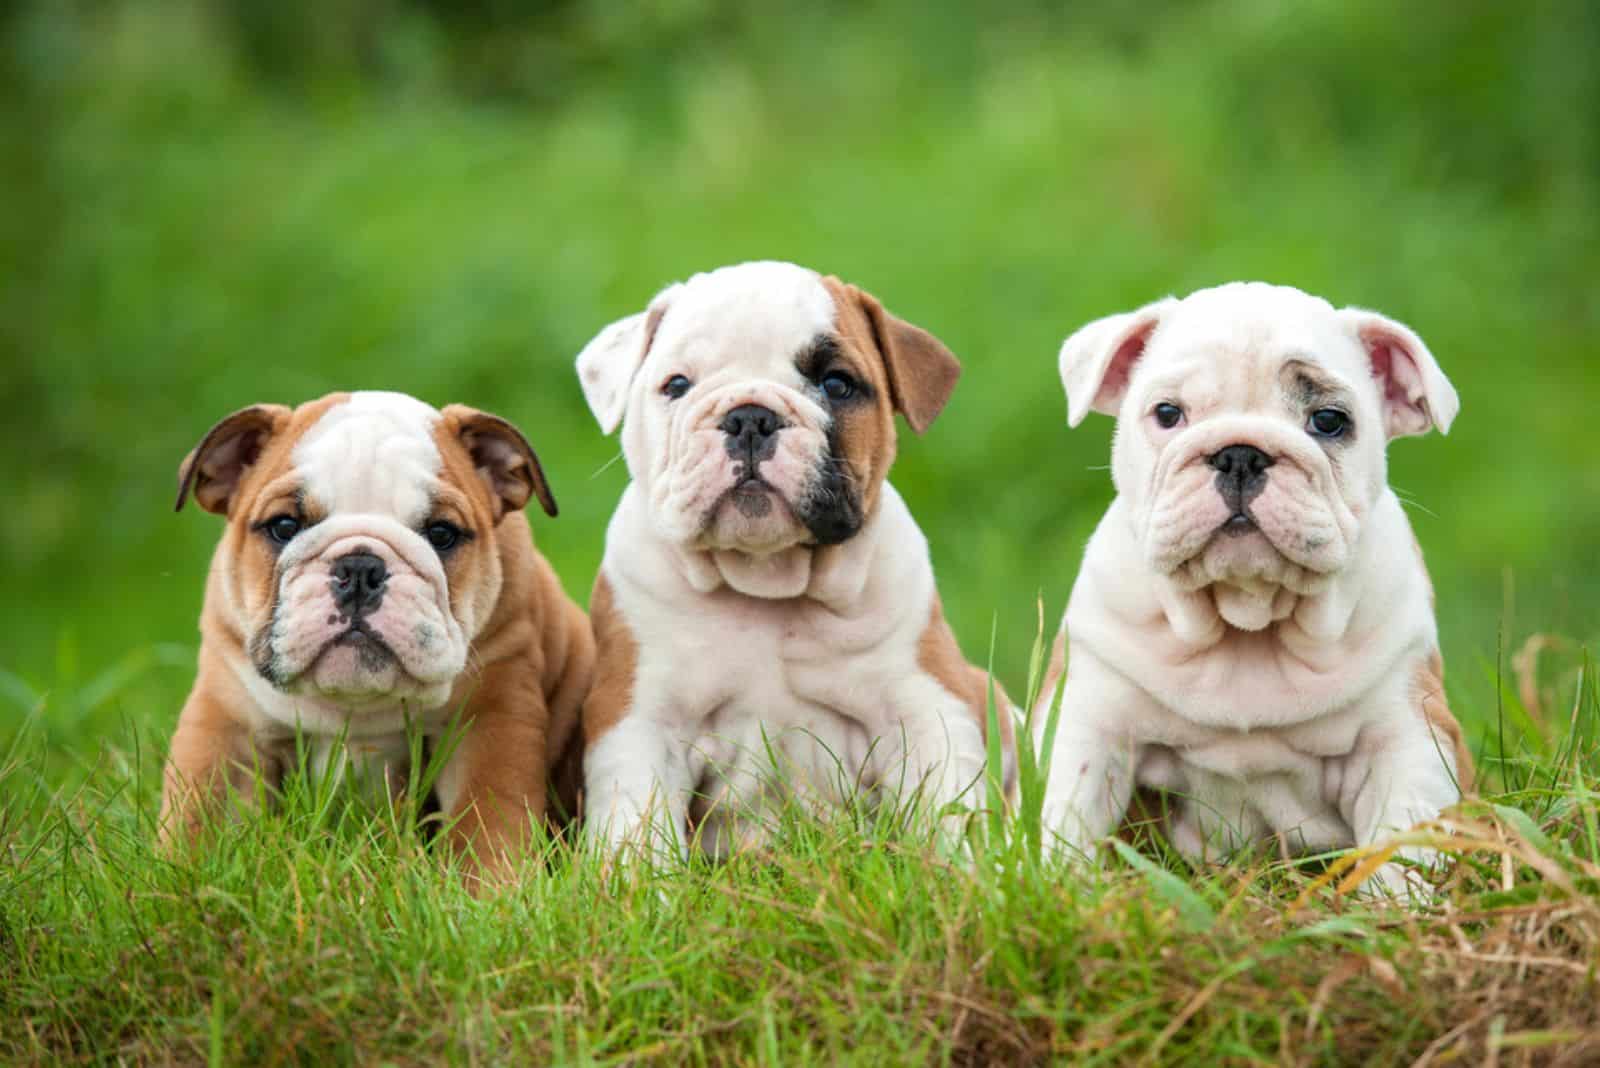 Three english bulldog puppies sitting on the grass